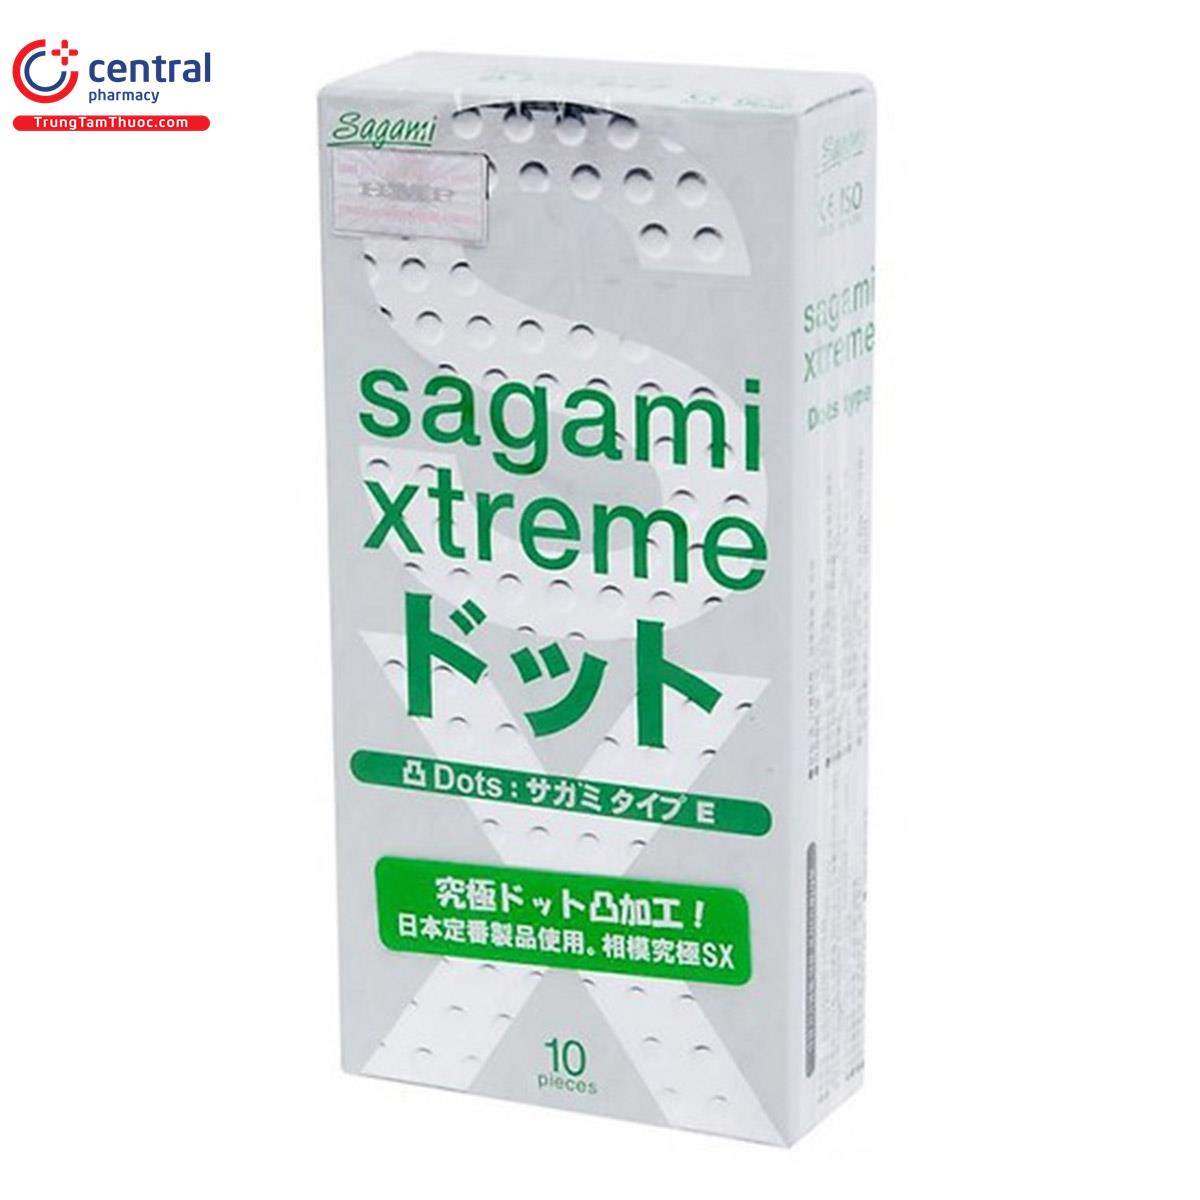 sagami xtreme 3 F2728